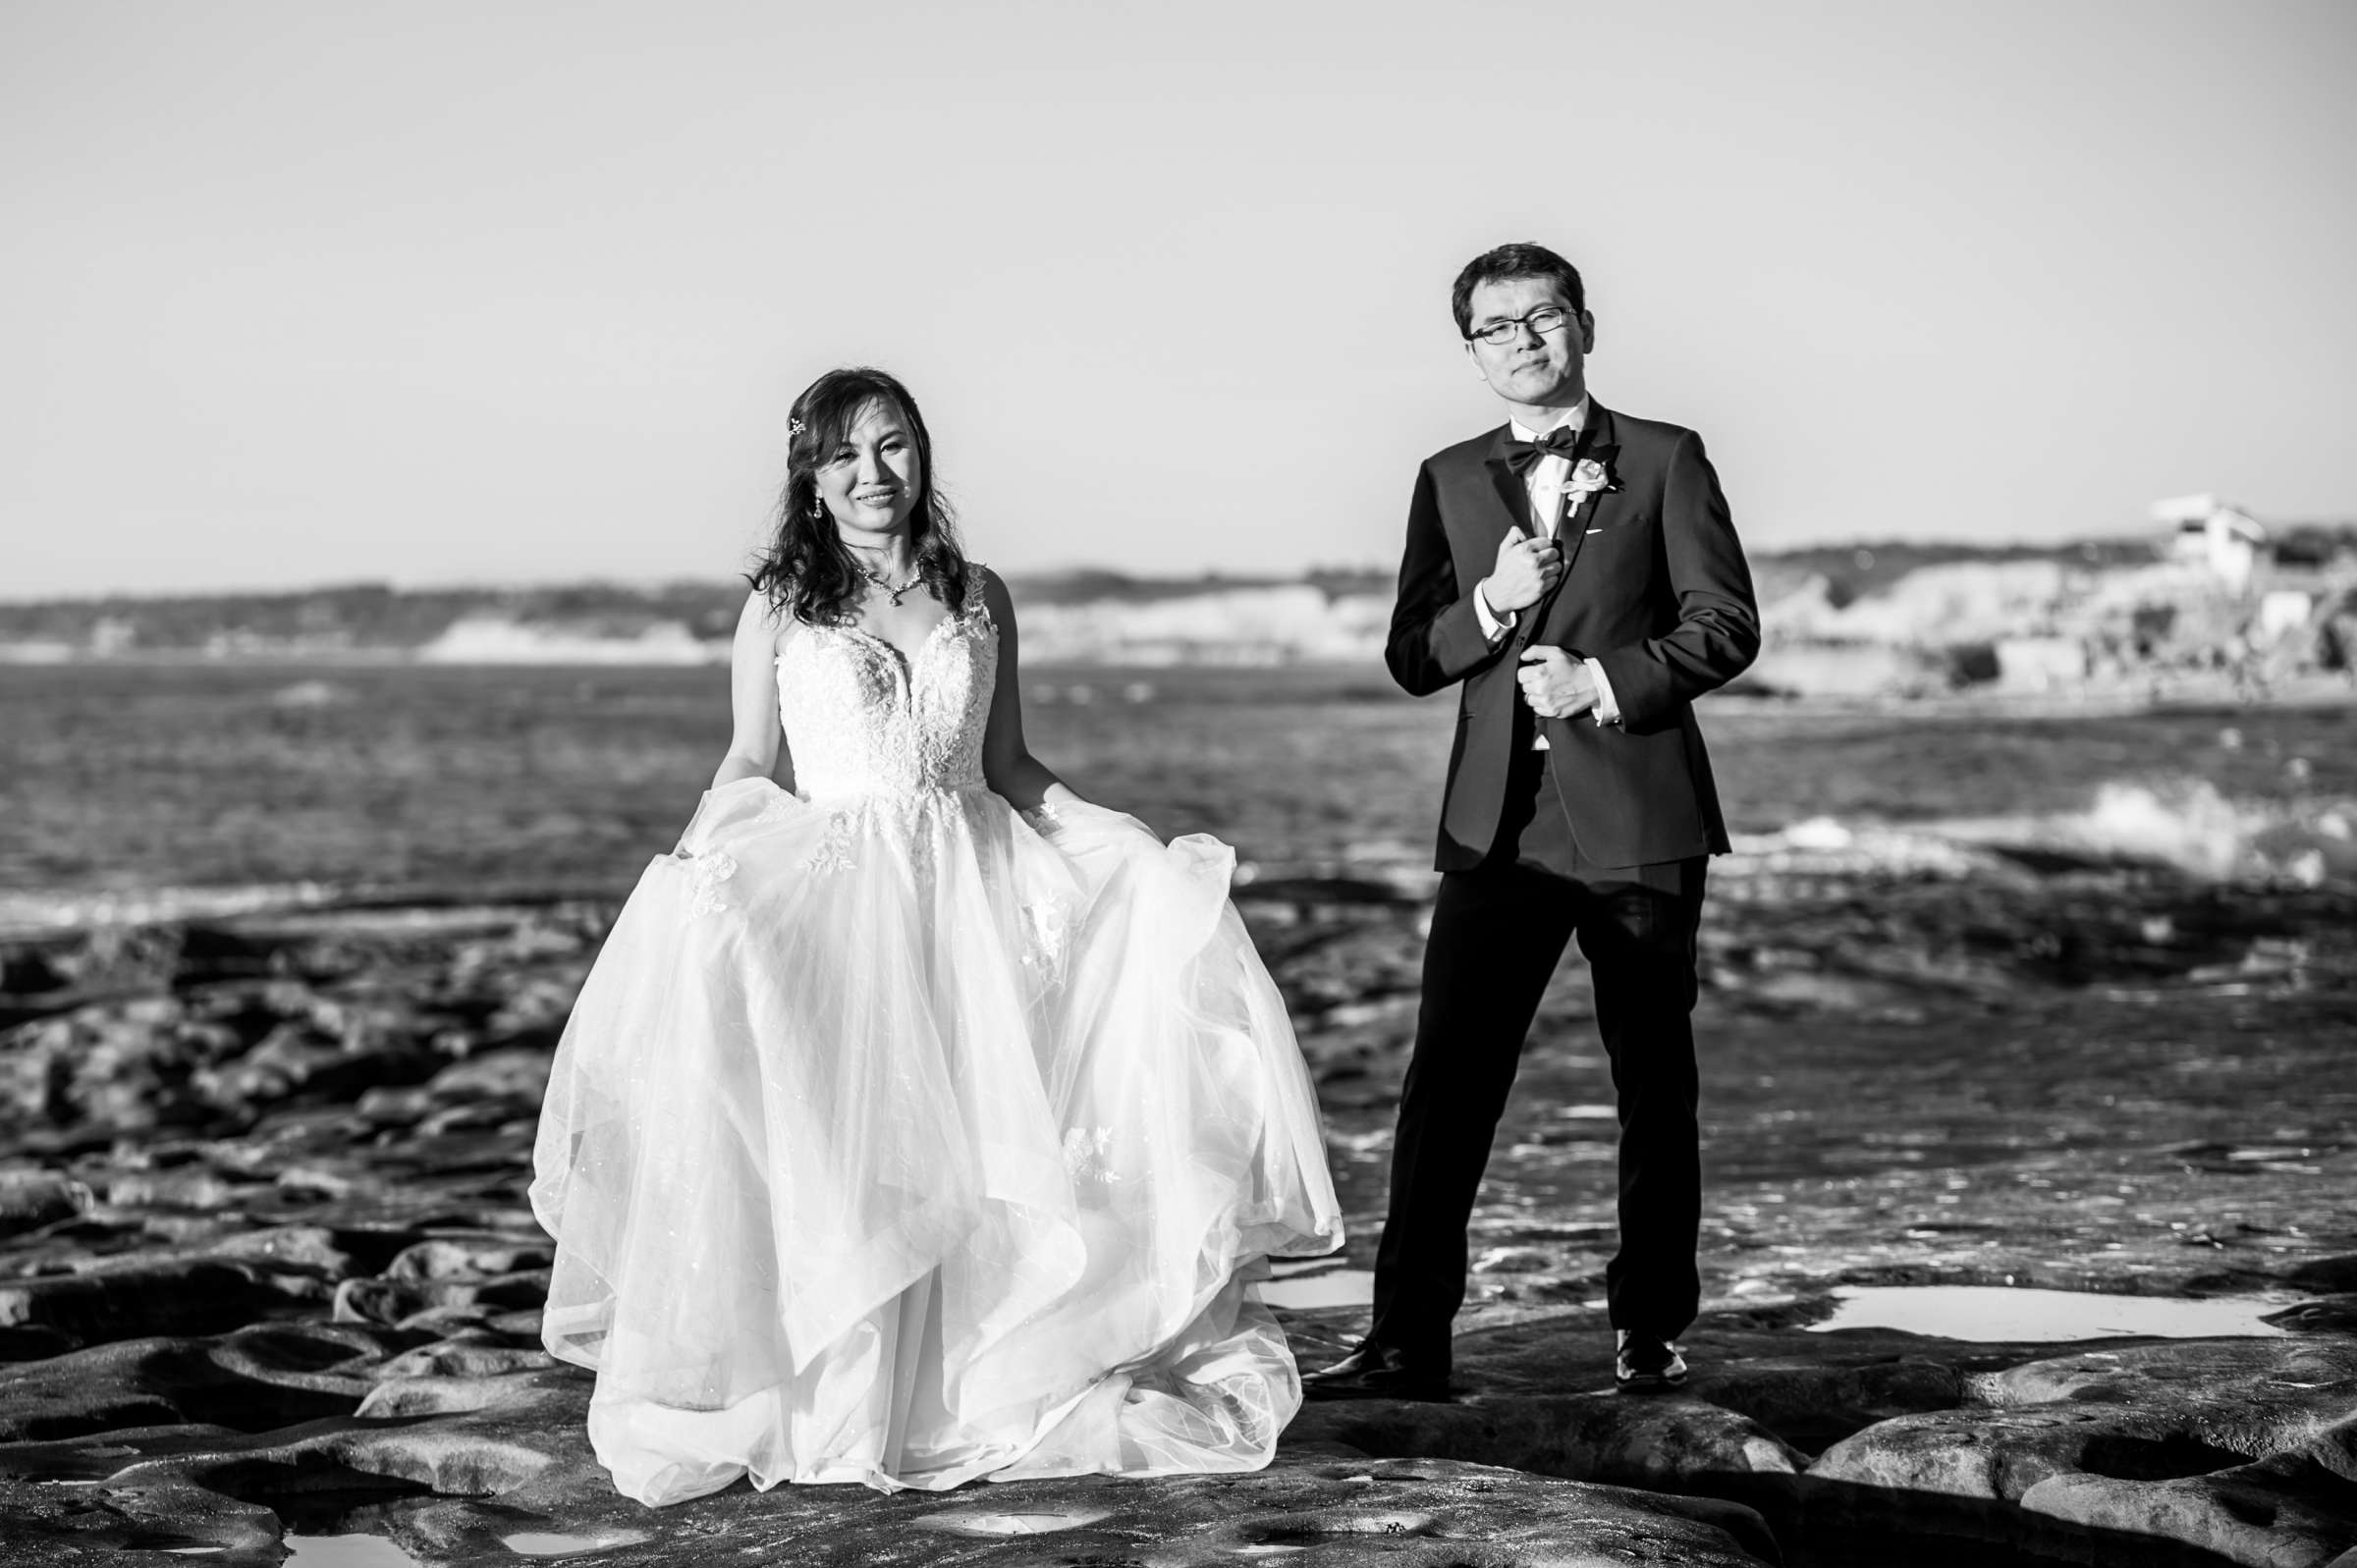 Cuvier Park-The Wedding Bowl Wedding, Yanjie and Tony Wedding Photo #9 by True Photography